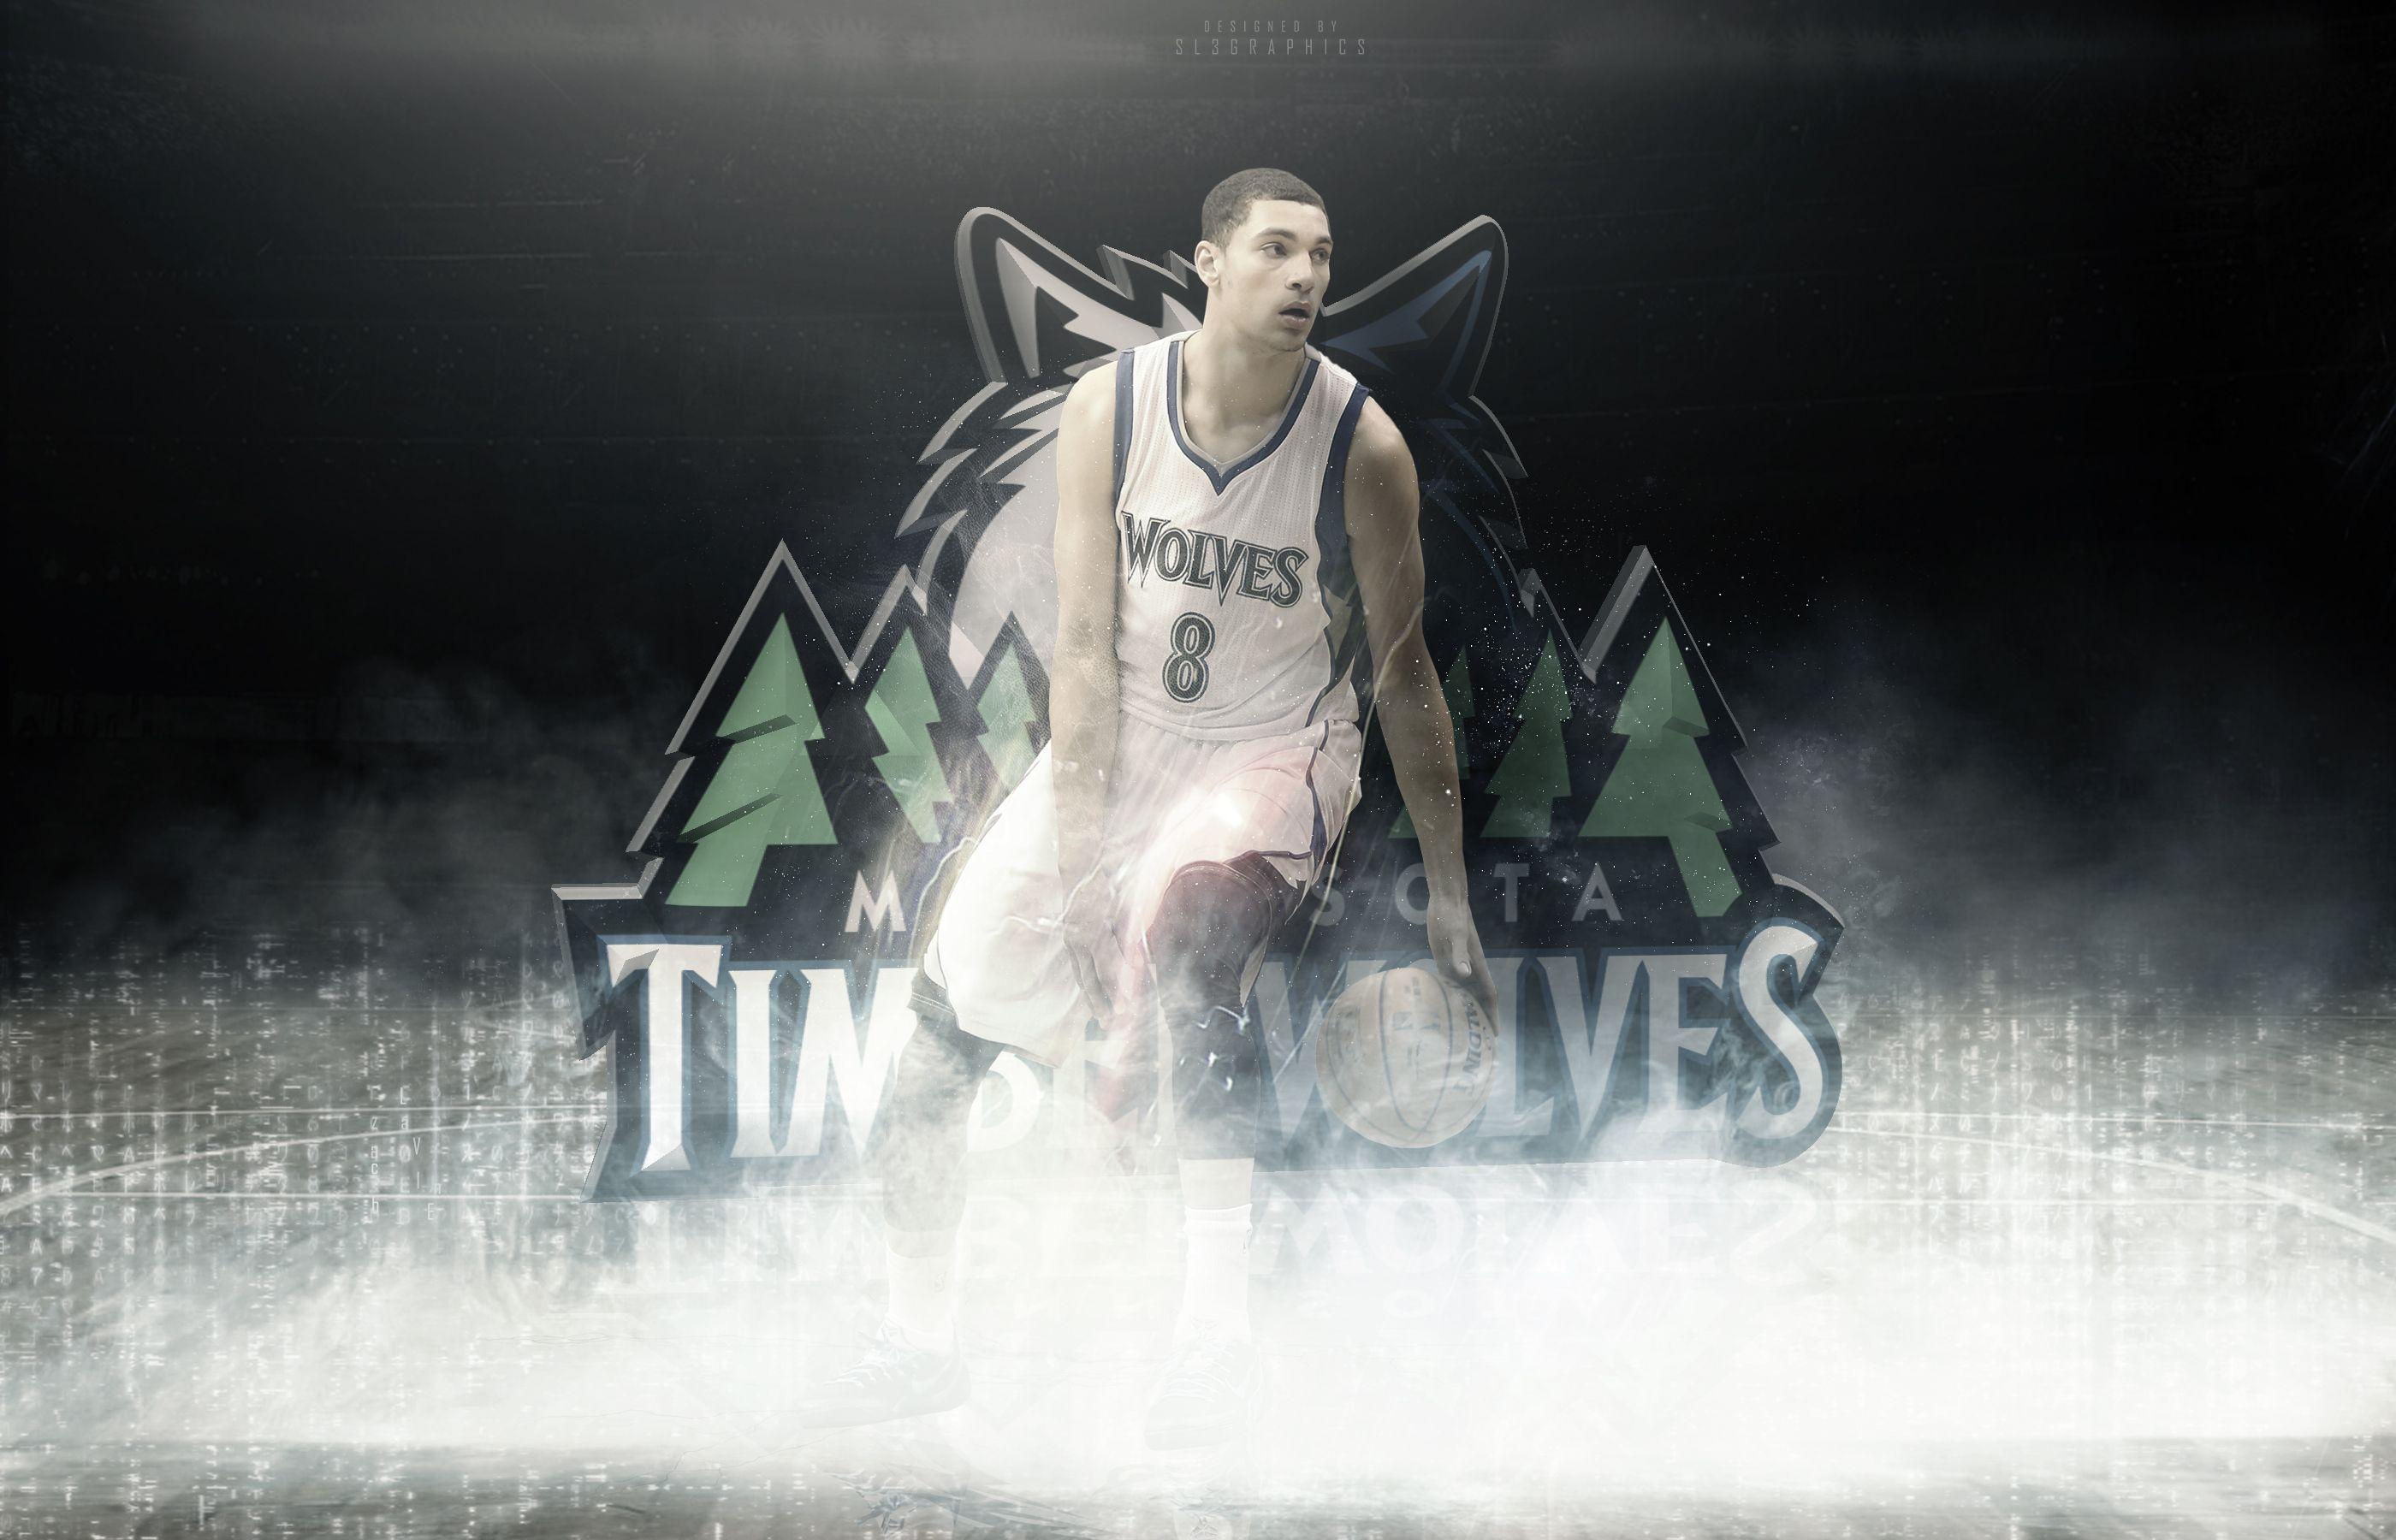 Zach LaVine 2015 Minnesota Timberwolves NBA Wallpaper free